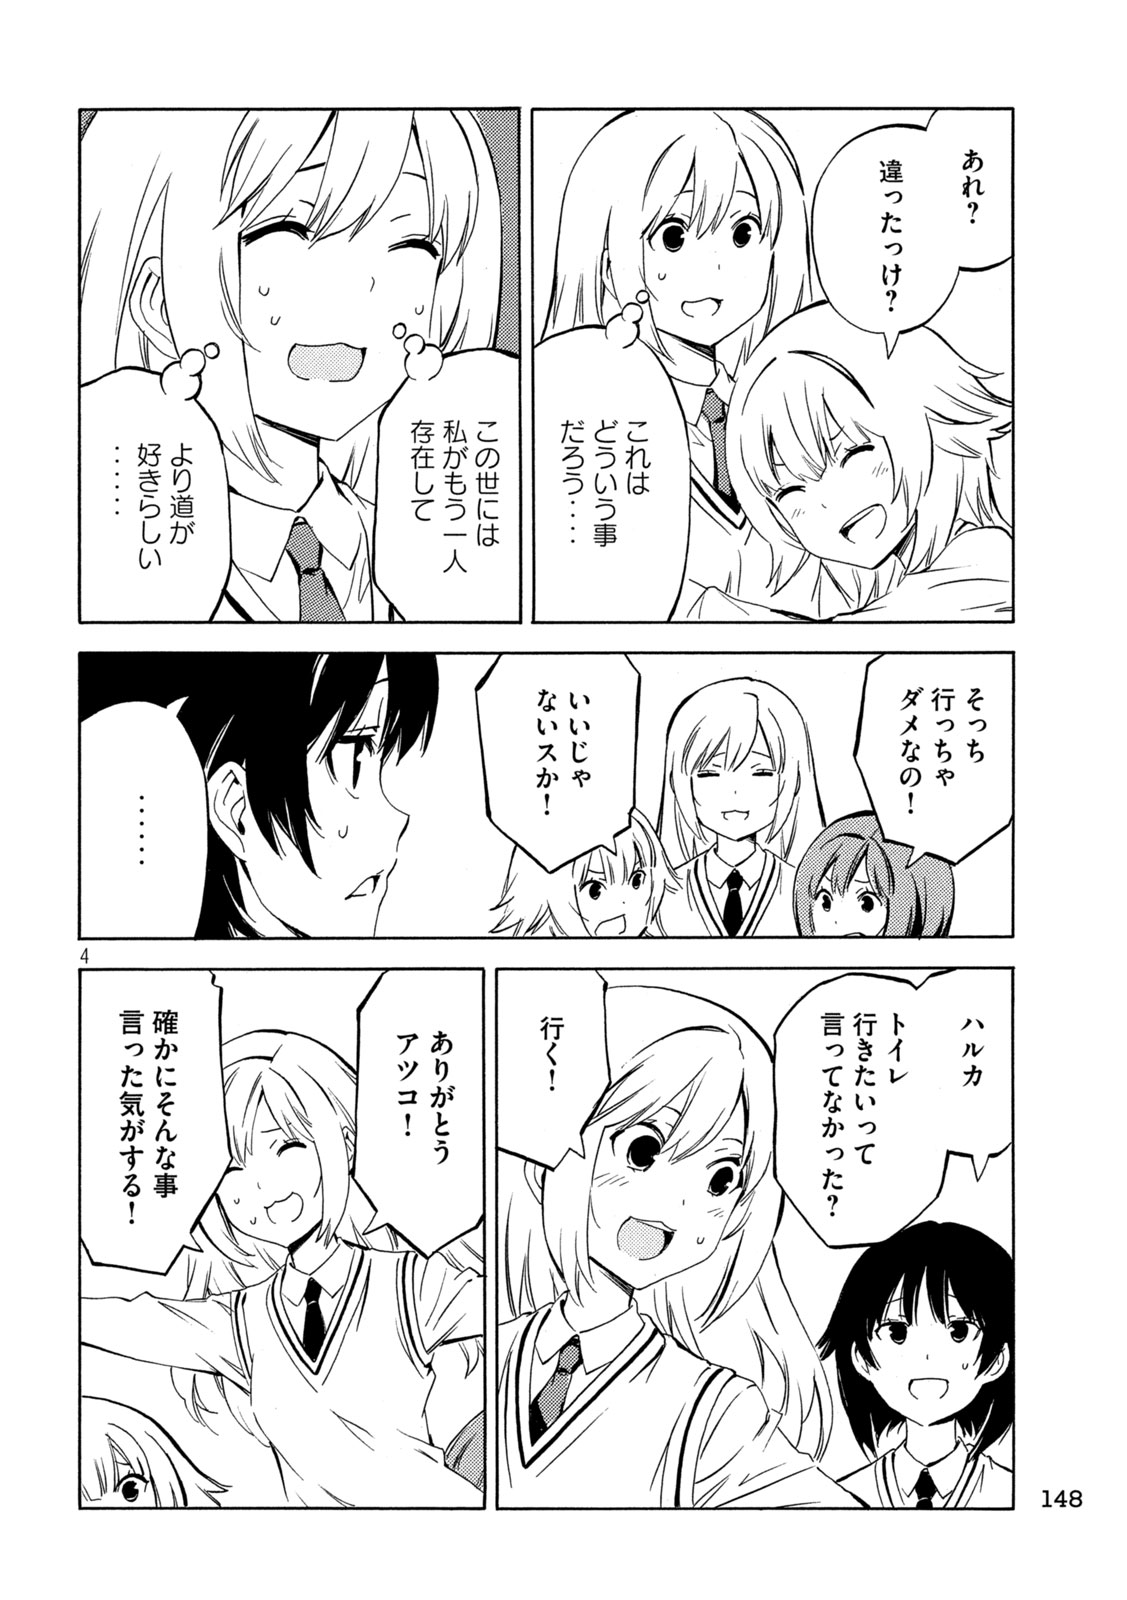 Minami-ke - Chapter 487 - Page 4